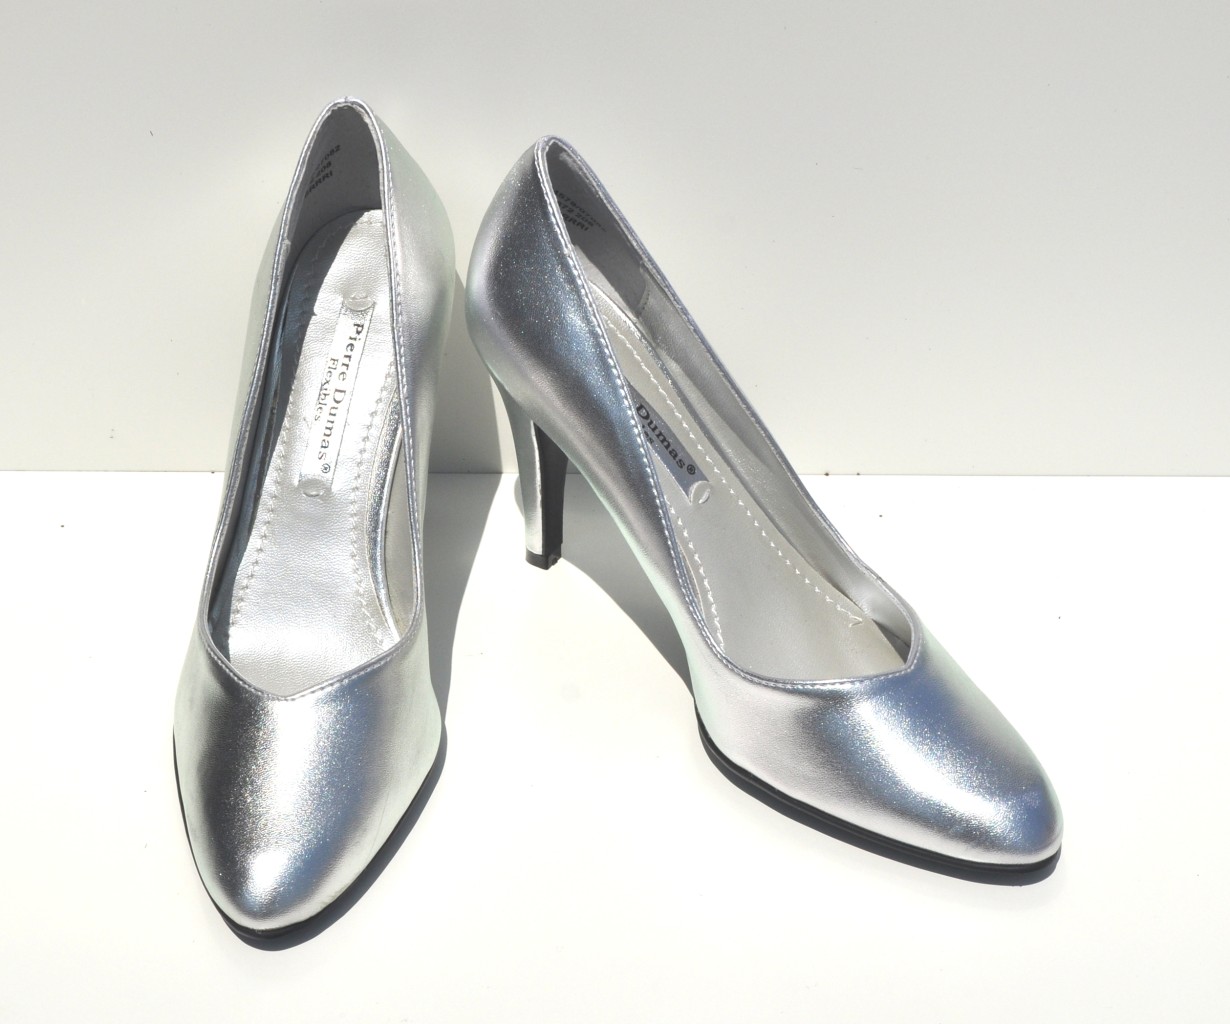 Pierre Dumas Silver Sexy High Heel Women Shoes #1141 (Retail $78) | eBay